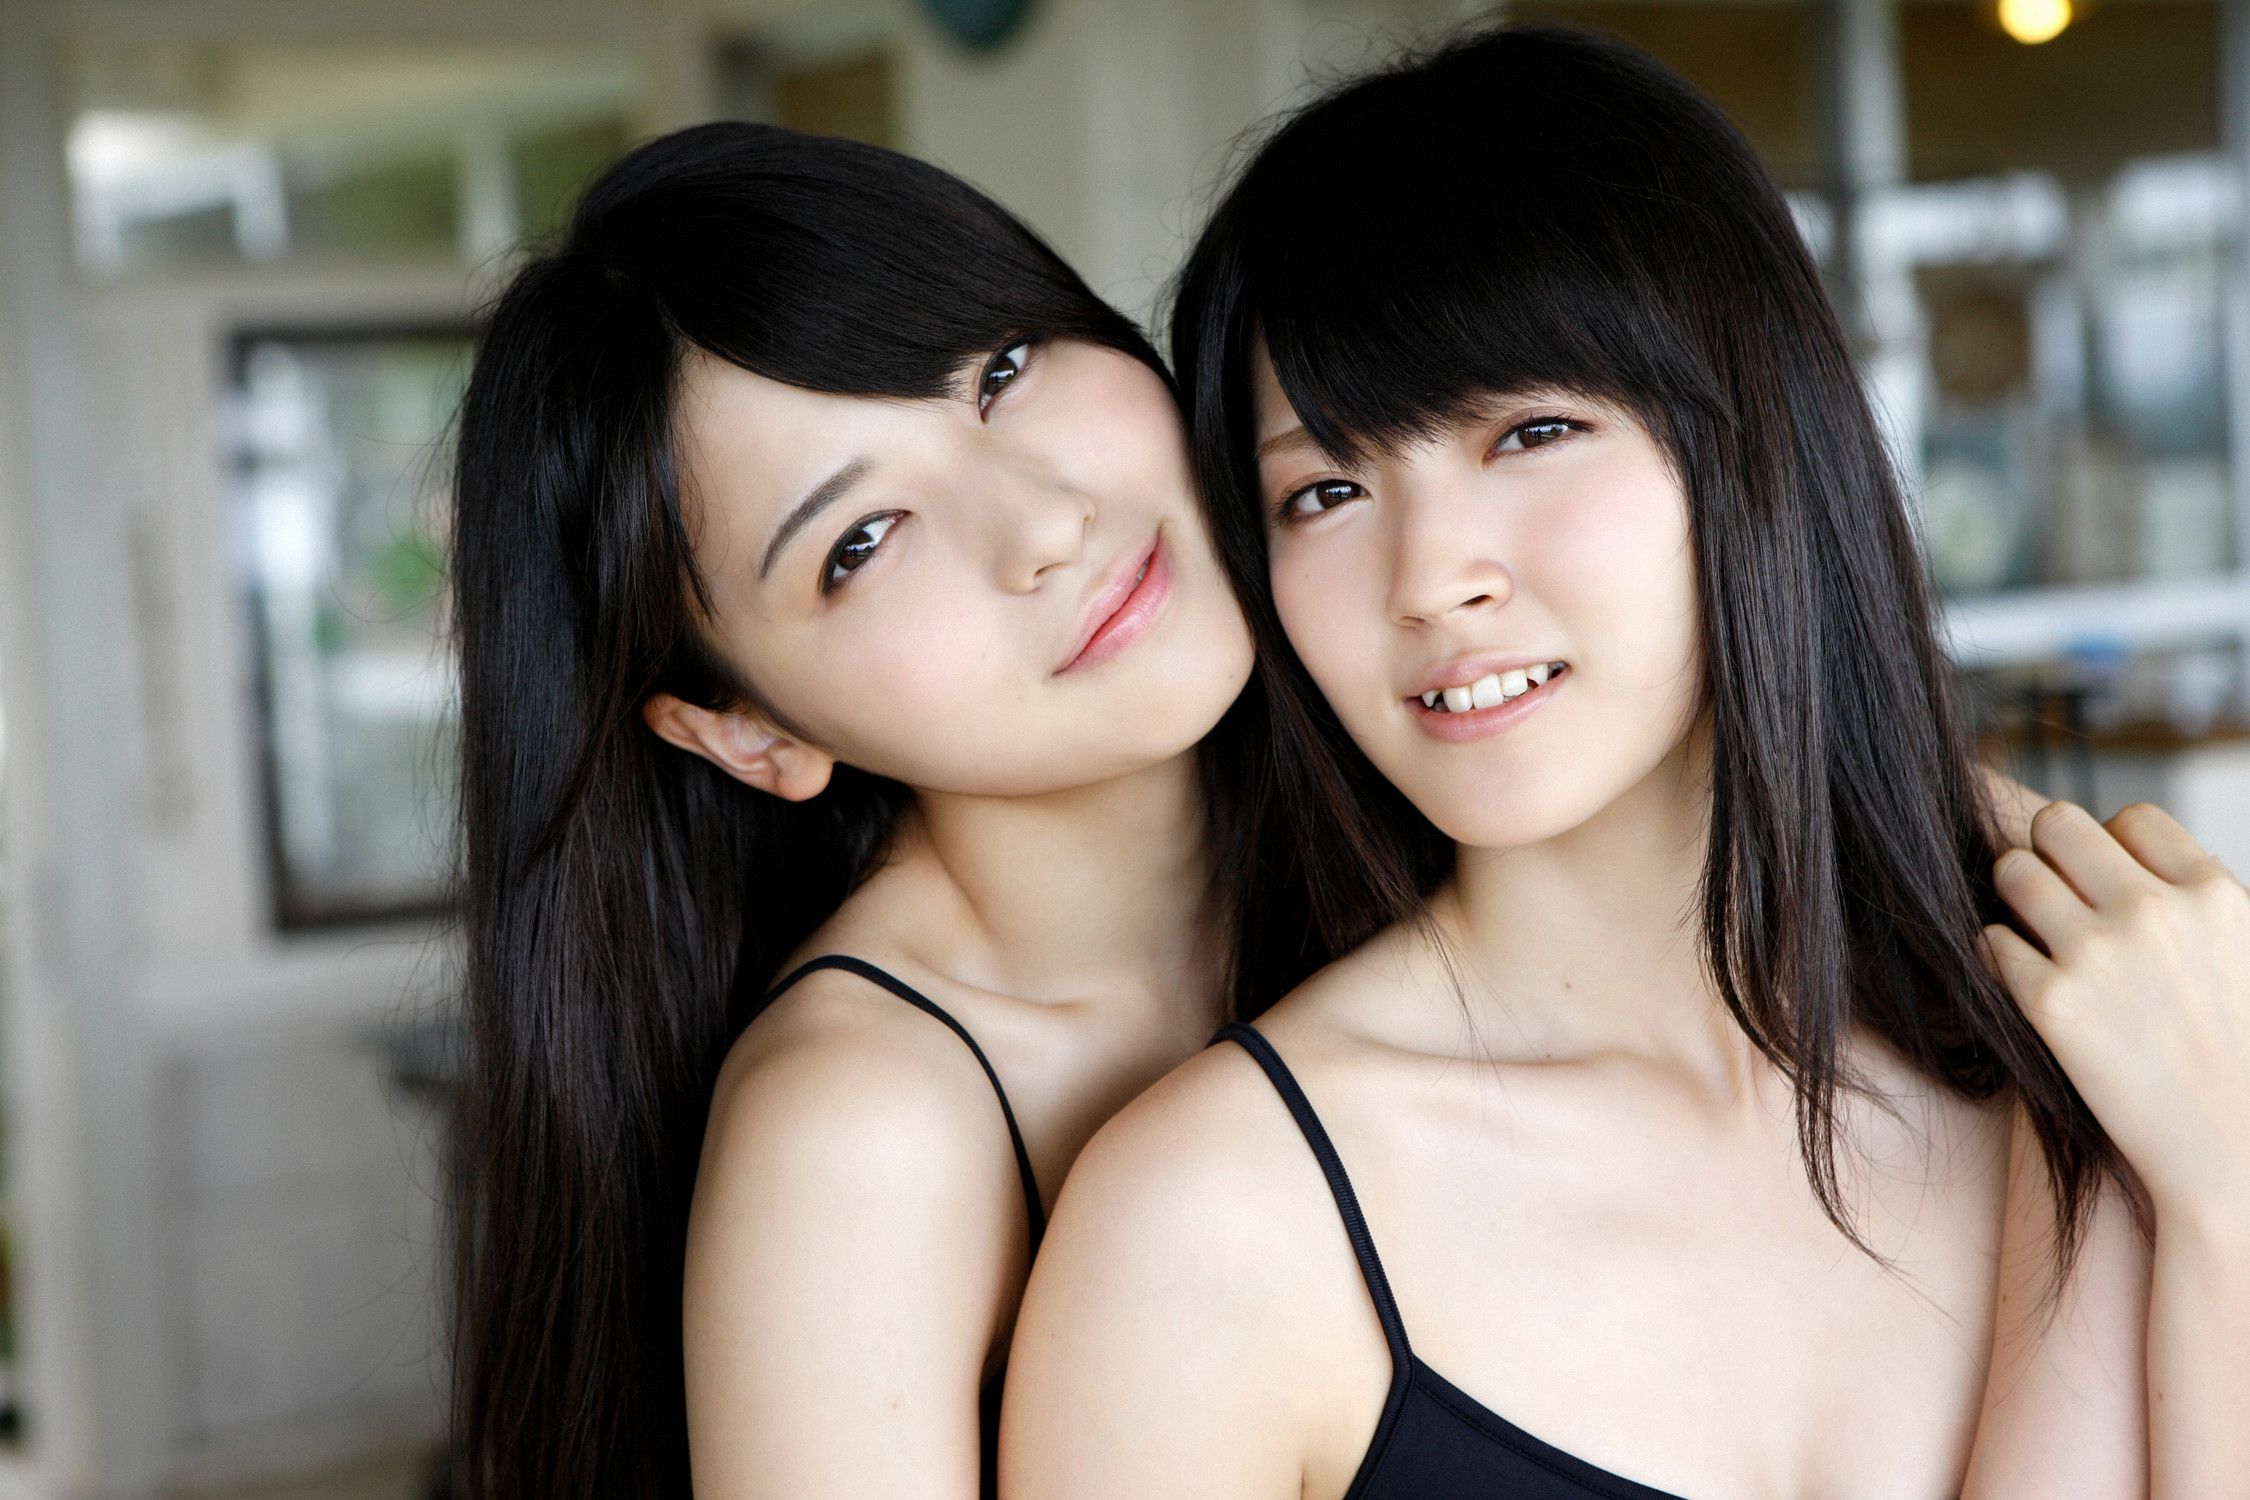 Lesbian японские. Airi Suzuki and Maimi Yajima. Японская девушка. Две девочки азиатки. Красивые женщины Японии.